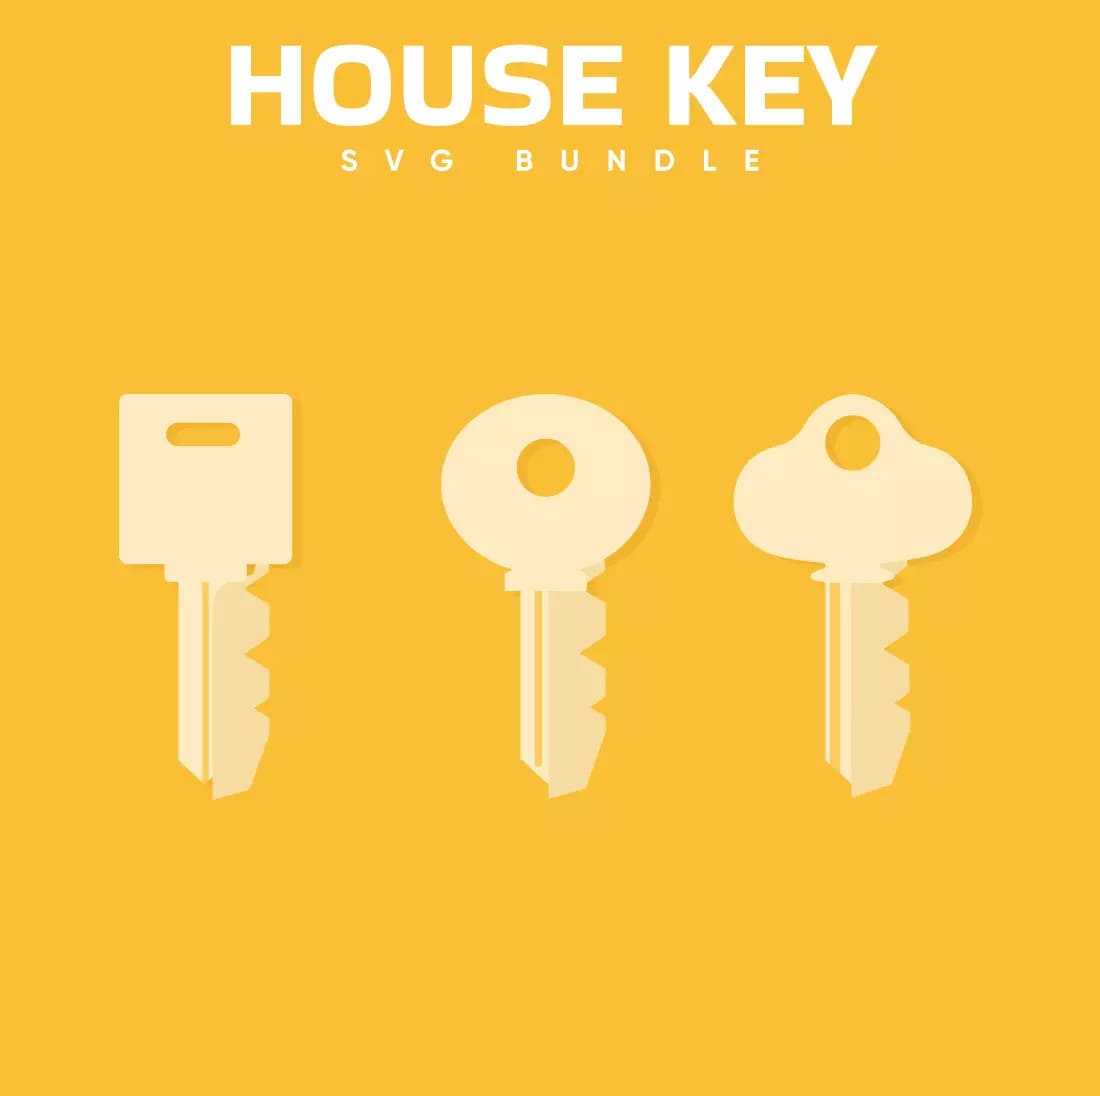 House Key SVG Bundle Preview.